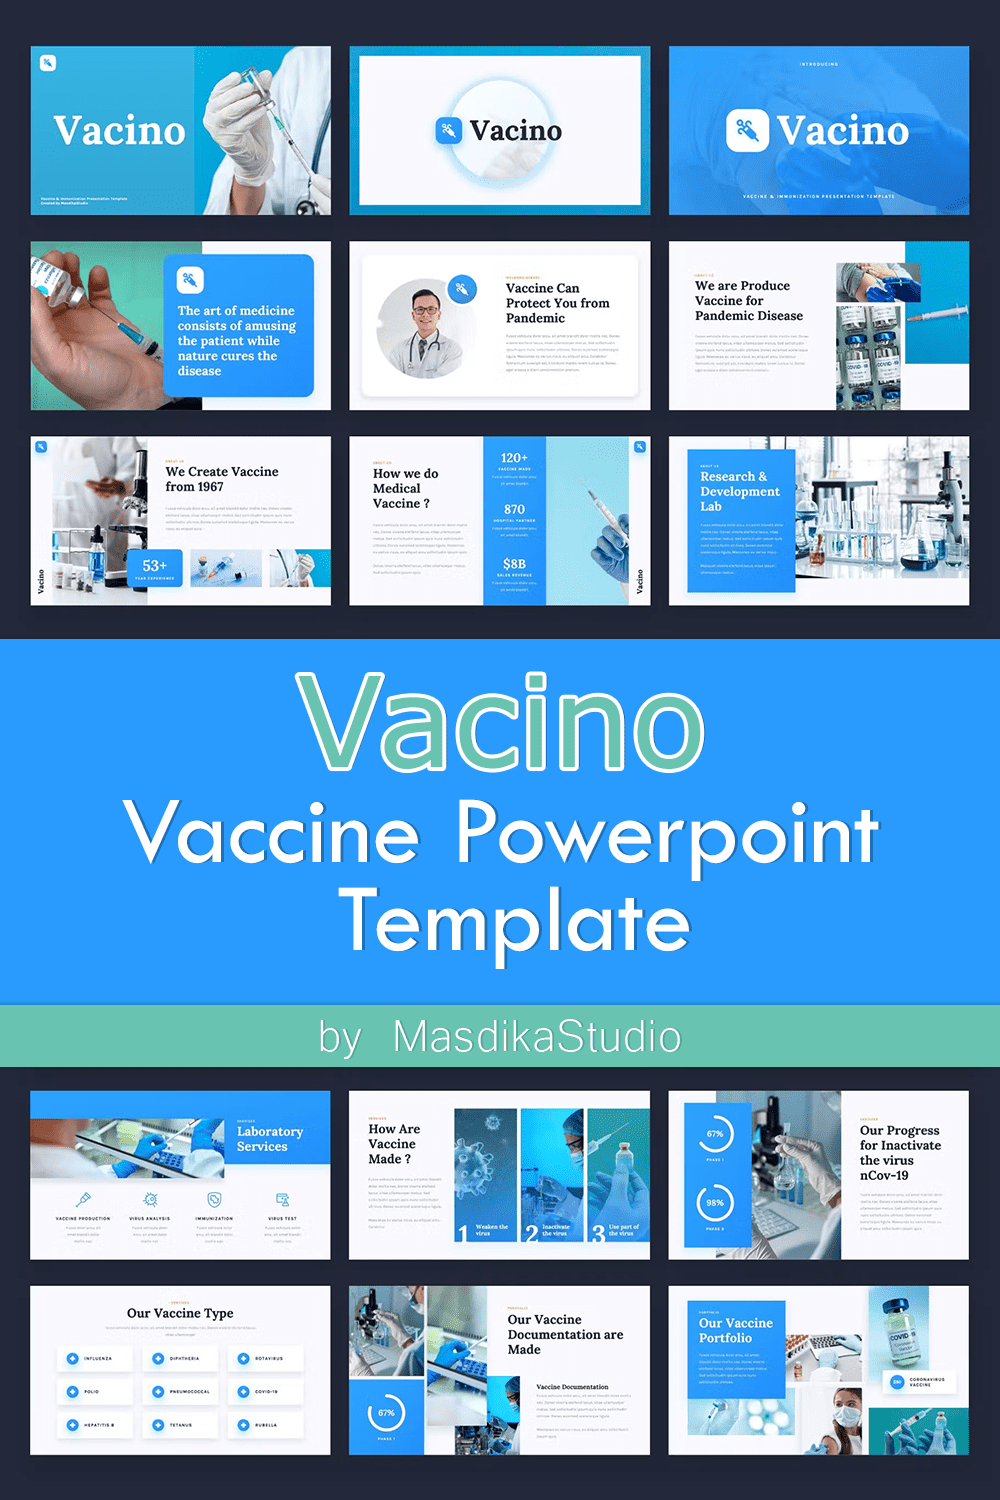 Vacino - Vaccine Powerpoint Template.